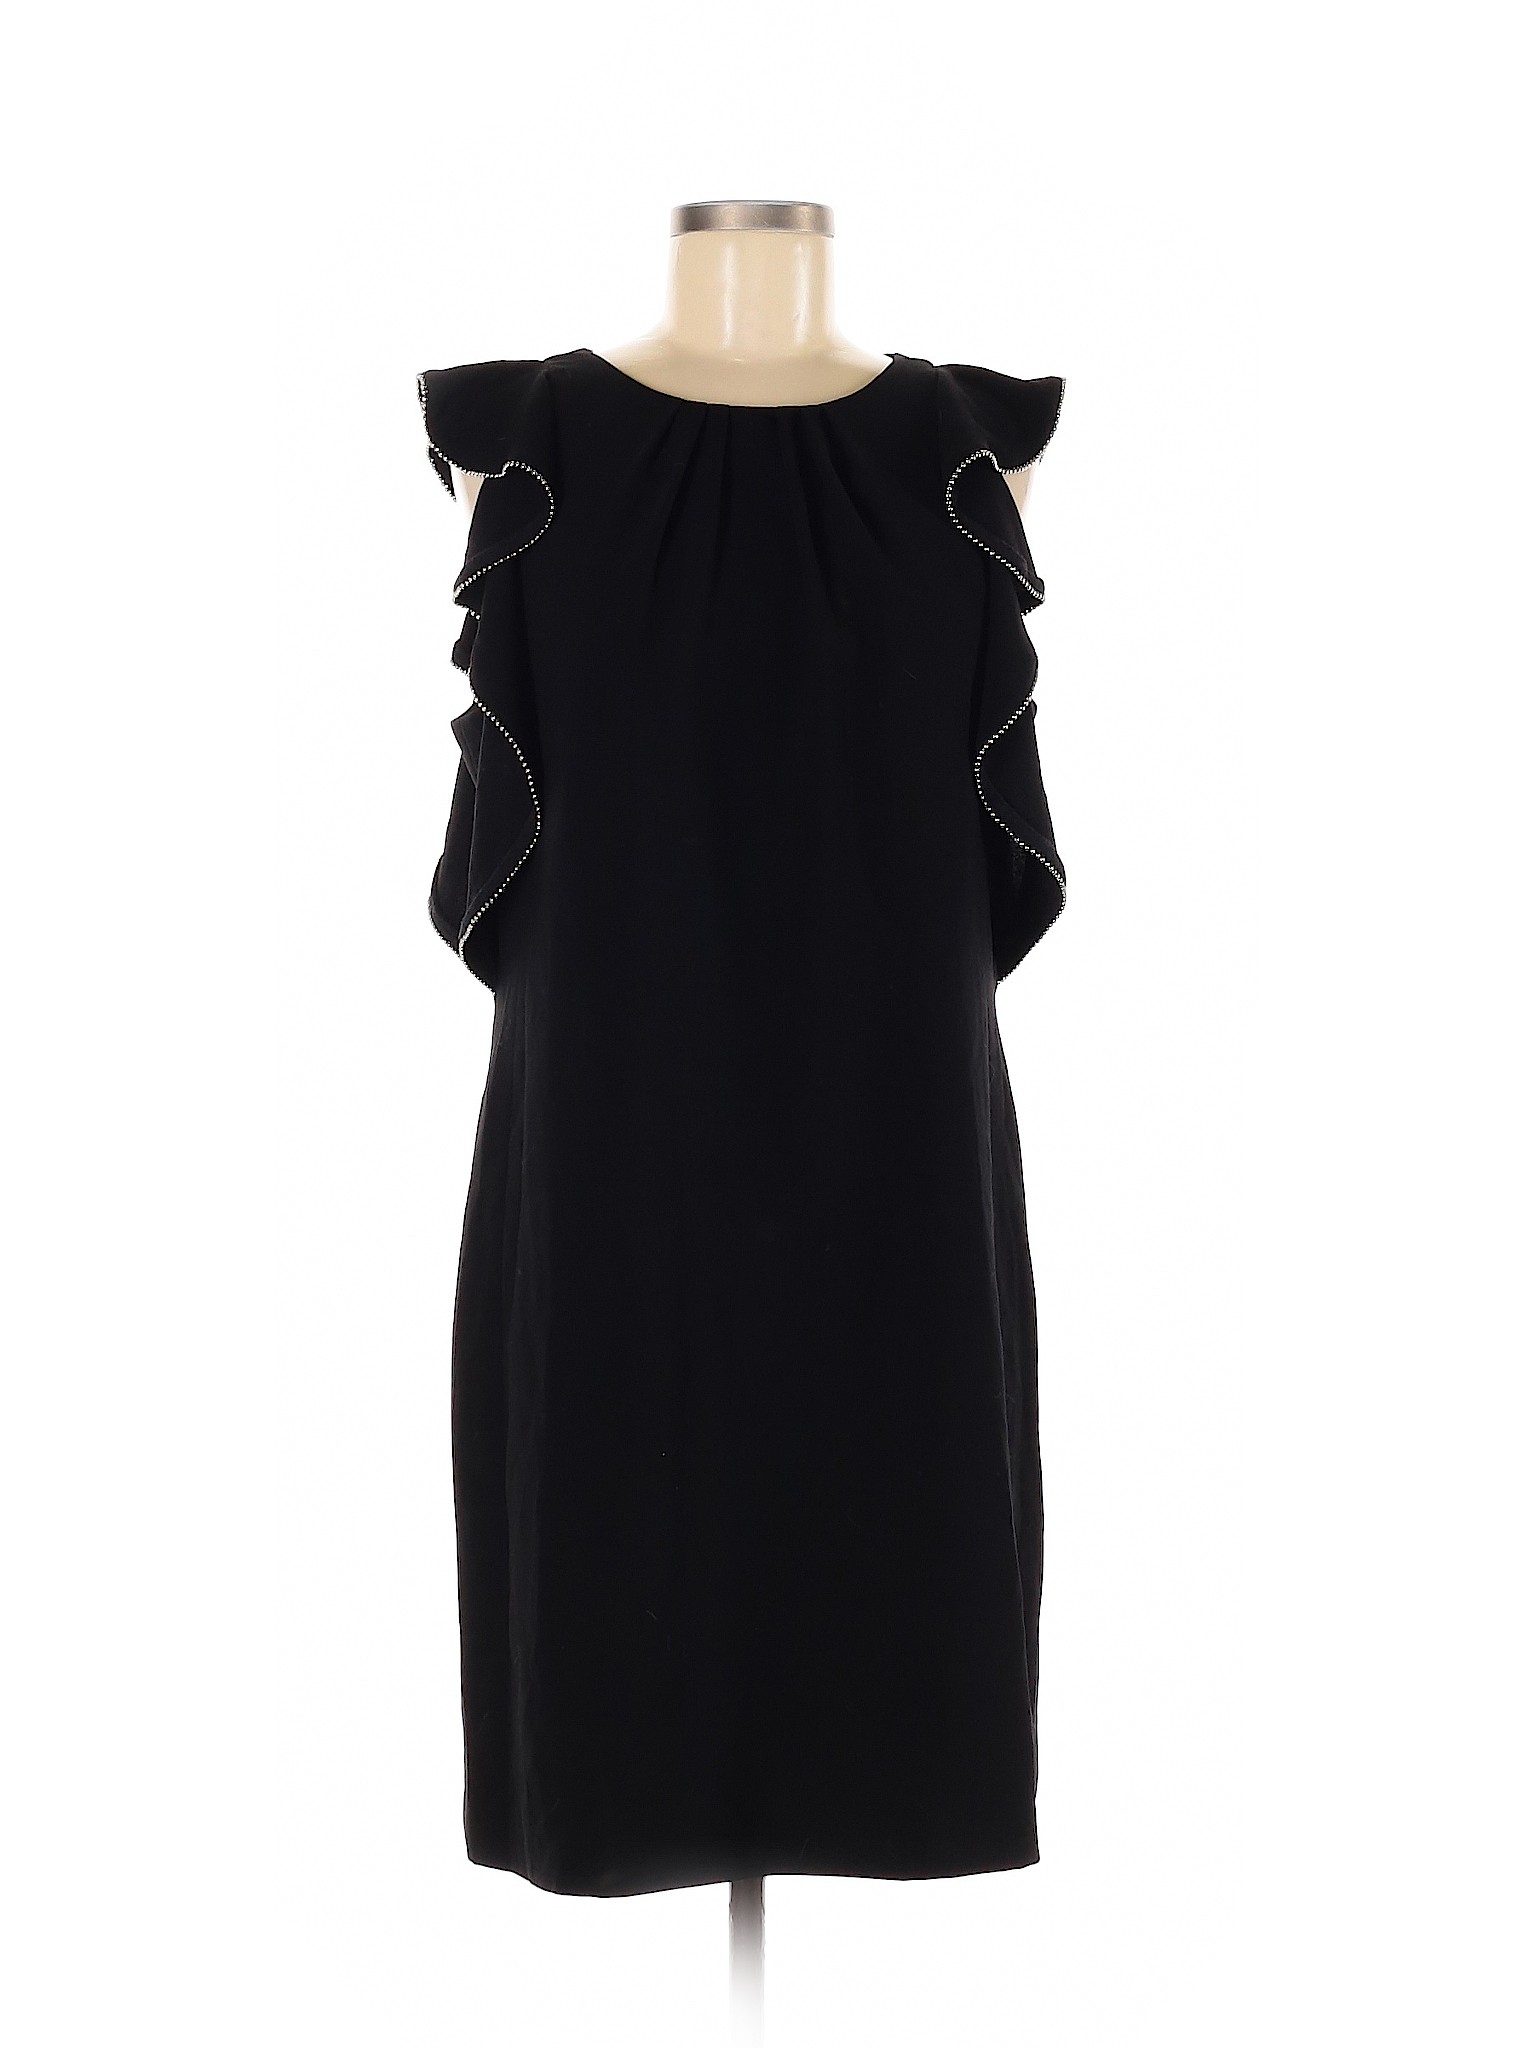 Shoshanna Women Black Cocktail Dress 12 | eBay